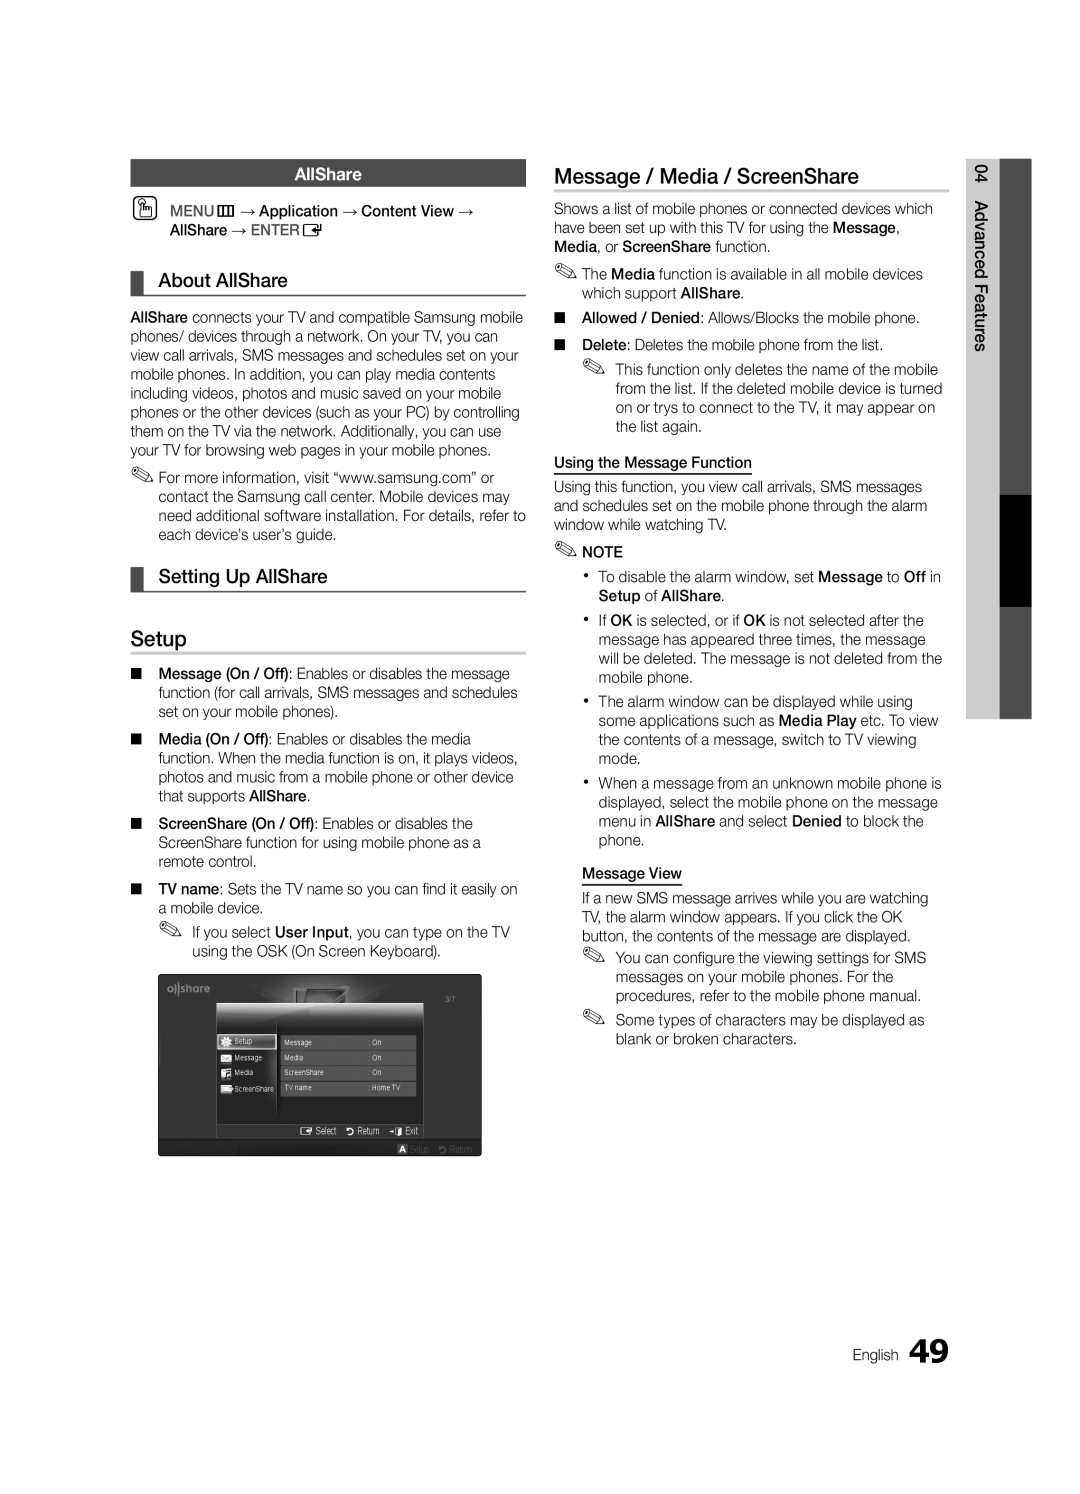 Samsung 6800 user manual Setup, Message / Media / ScreenShare, About AllShare, Setting Up AllShare 